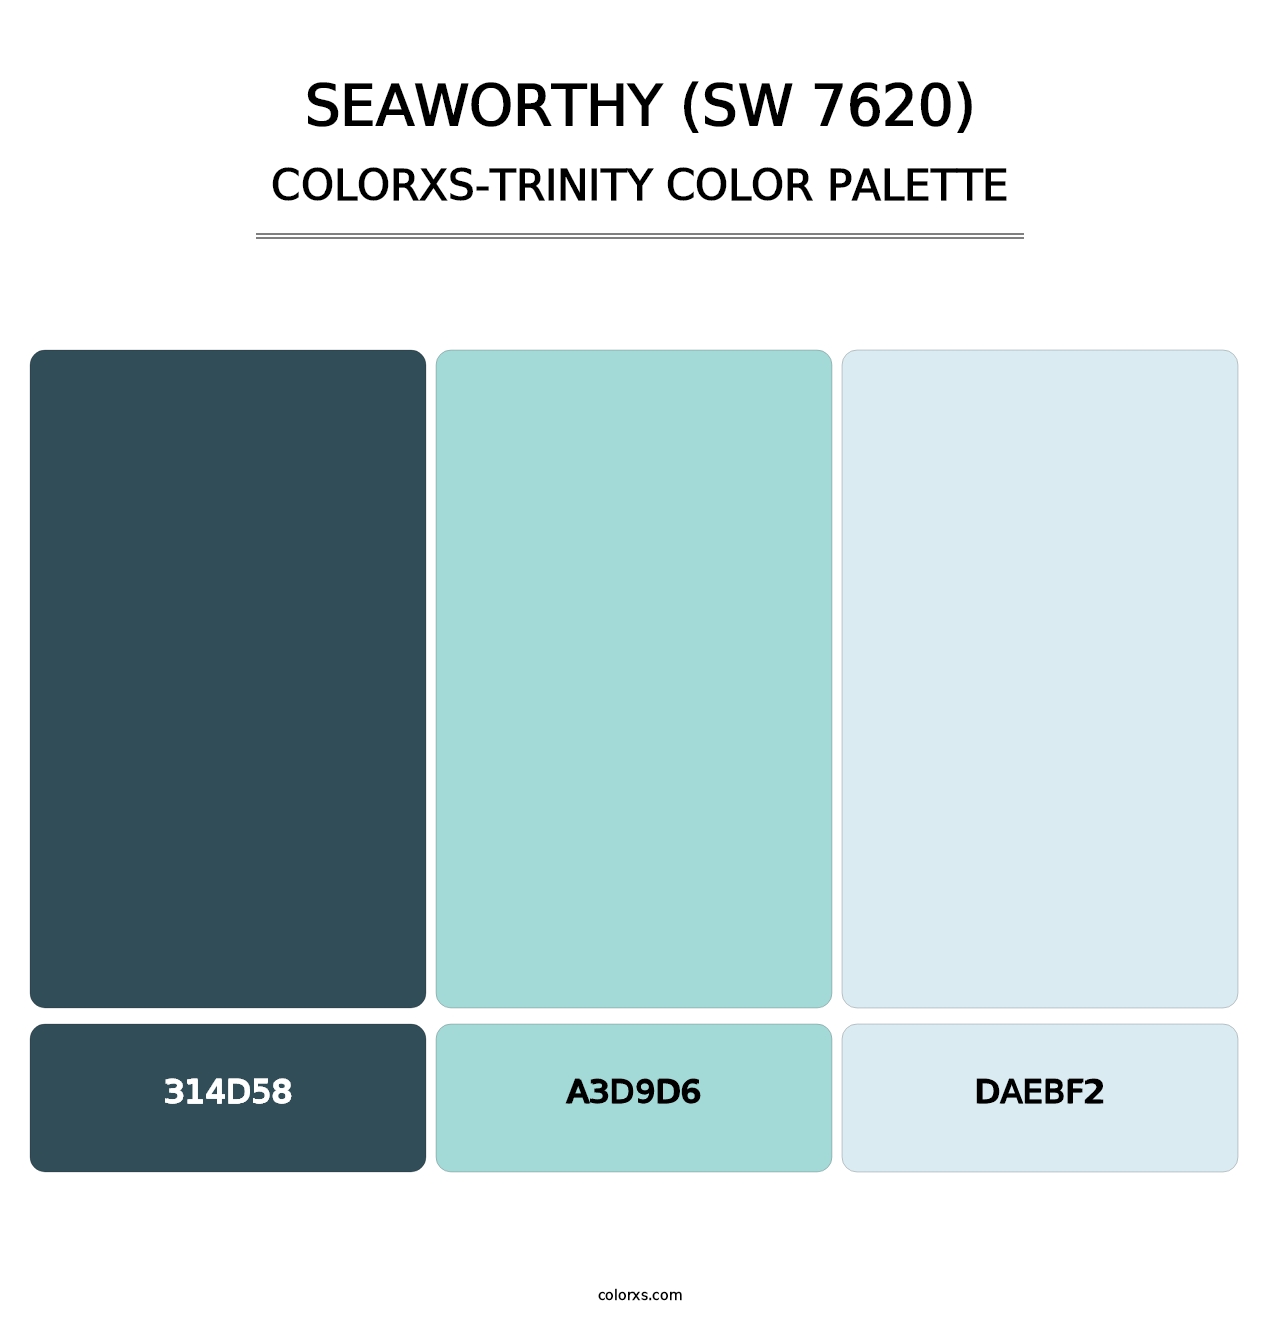 Seaworthy (SW 7620) - Colorxs Trinity Palette